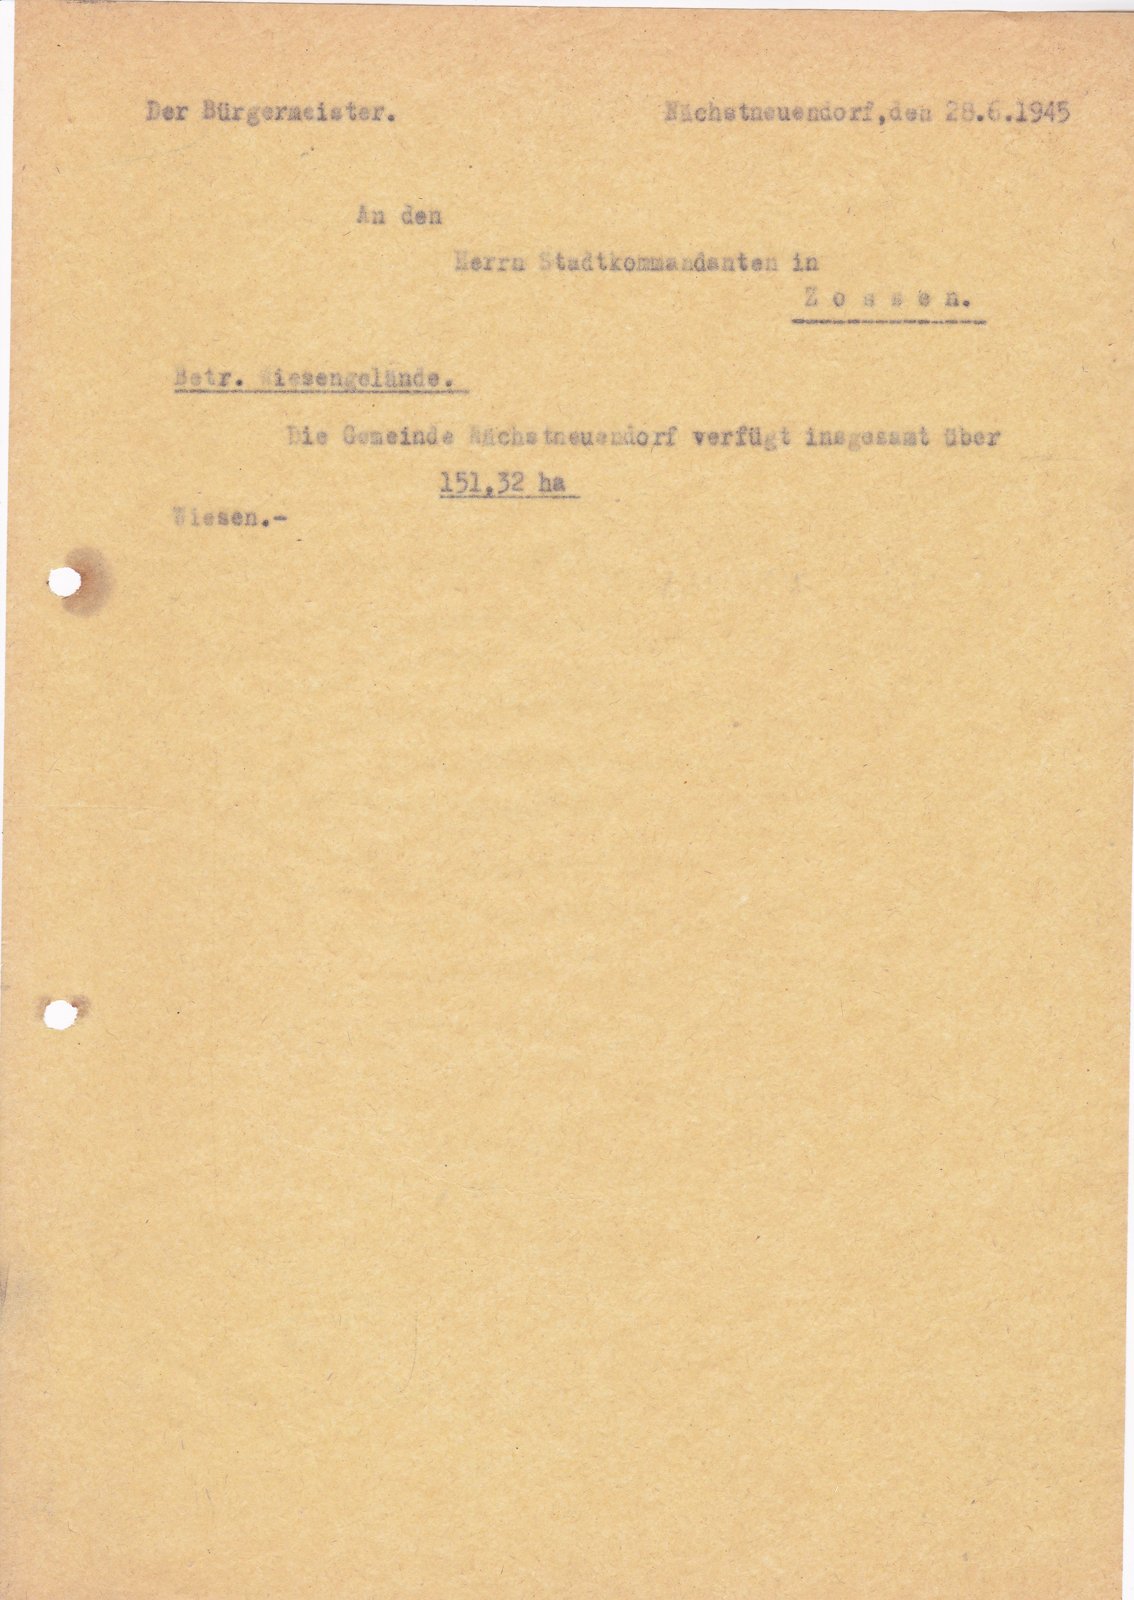 BM N.Neuendorf an Stadtkommandant, 28.06.1945 (Heimatverein "Alter Krug" Zossen e.V. CC BY-NC-SA)